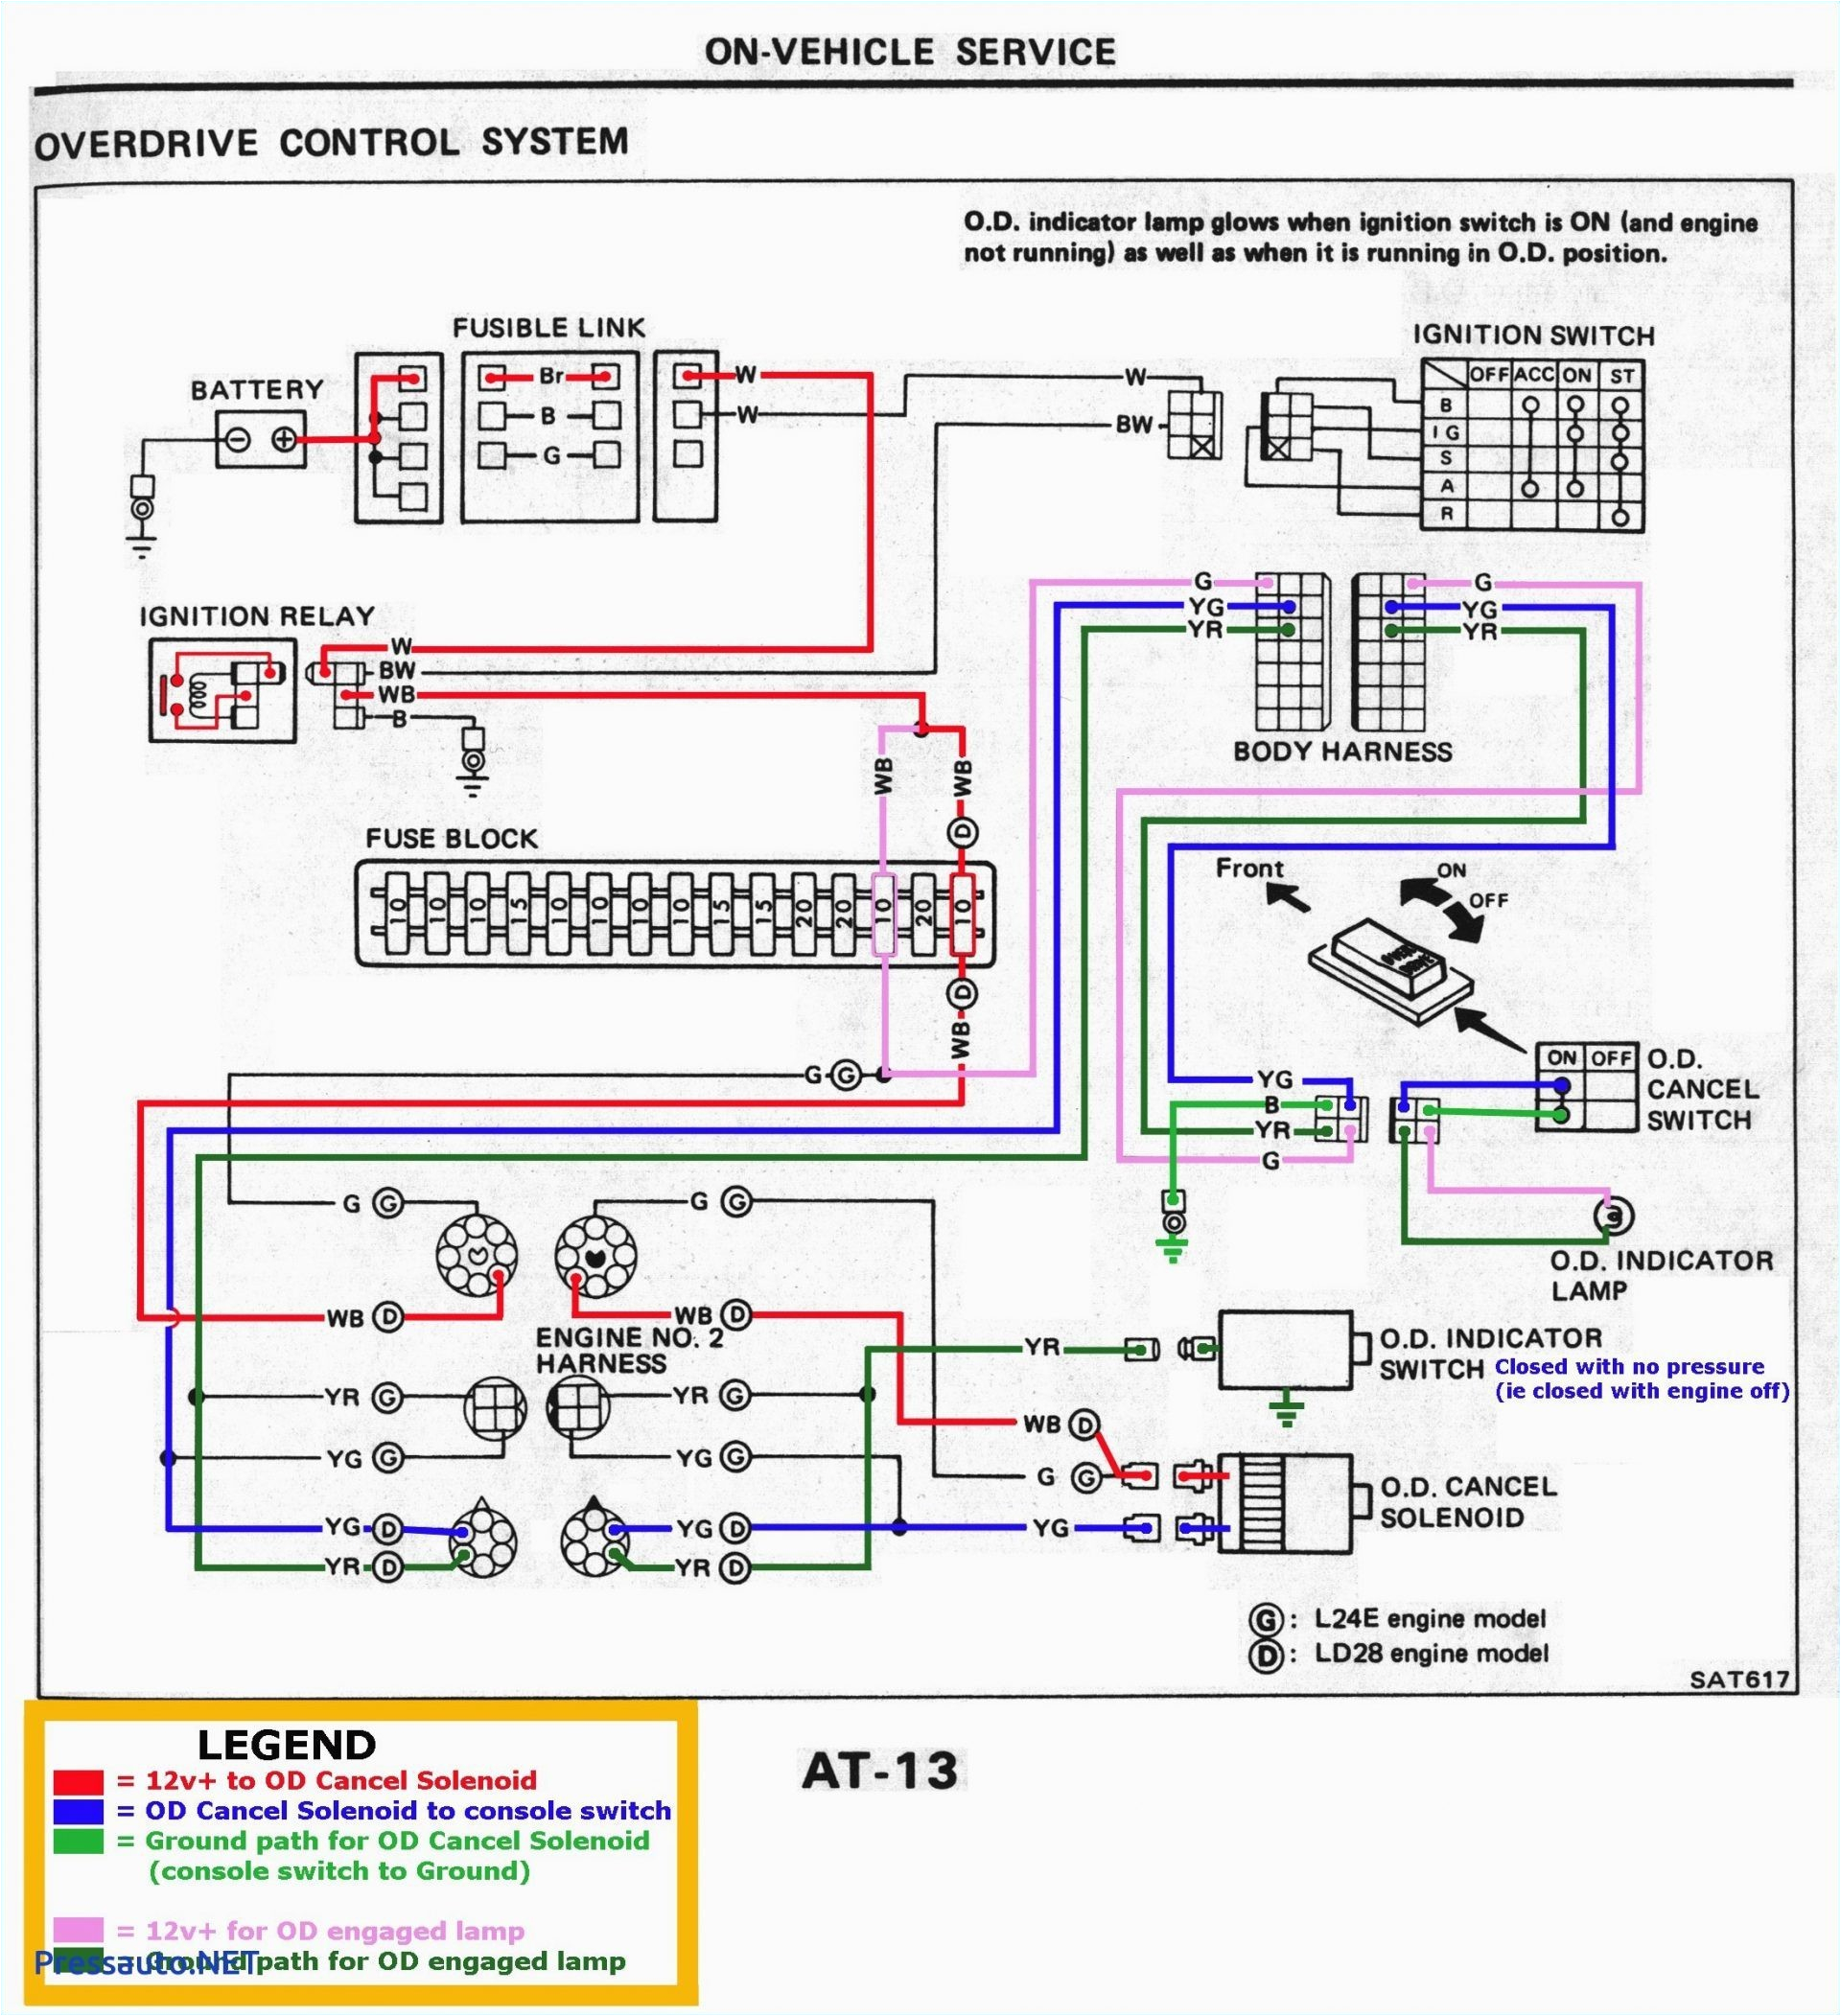 milnor wiring diagrams manual e book milnor wiring diagrams